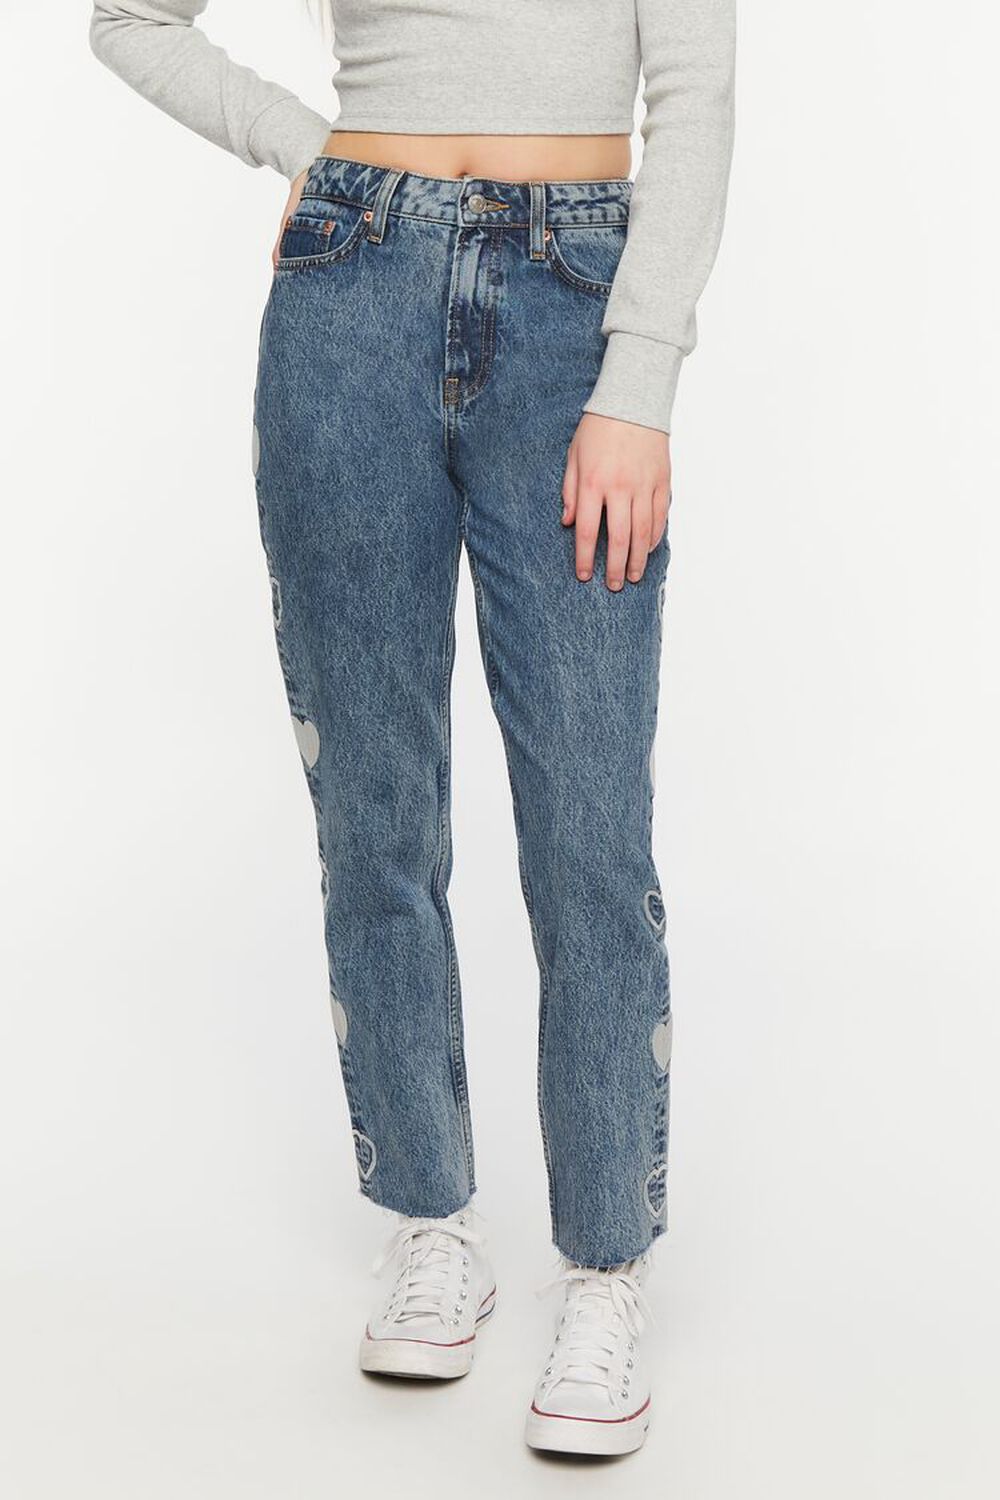 MEDIUM DENIM Heart Embroidered Straight-Leg Jeans, image 1